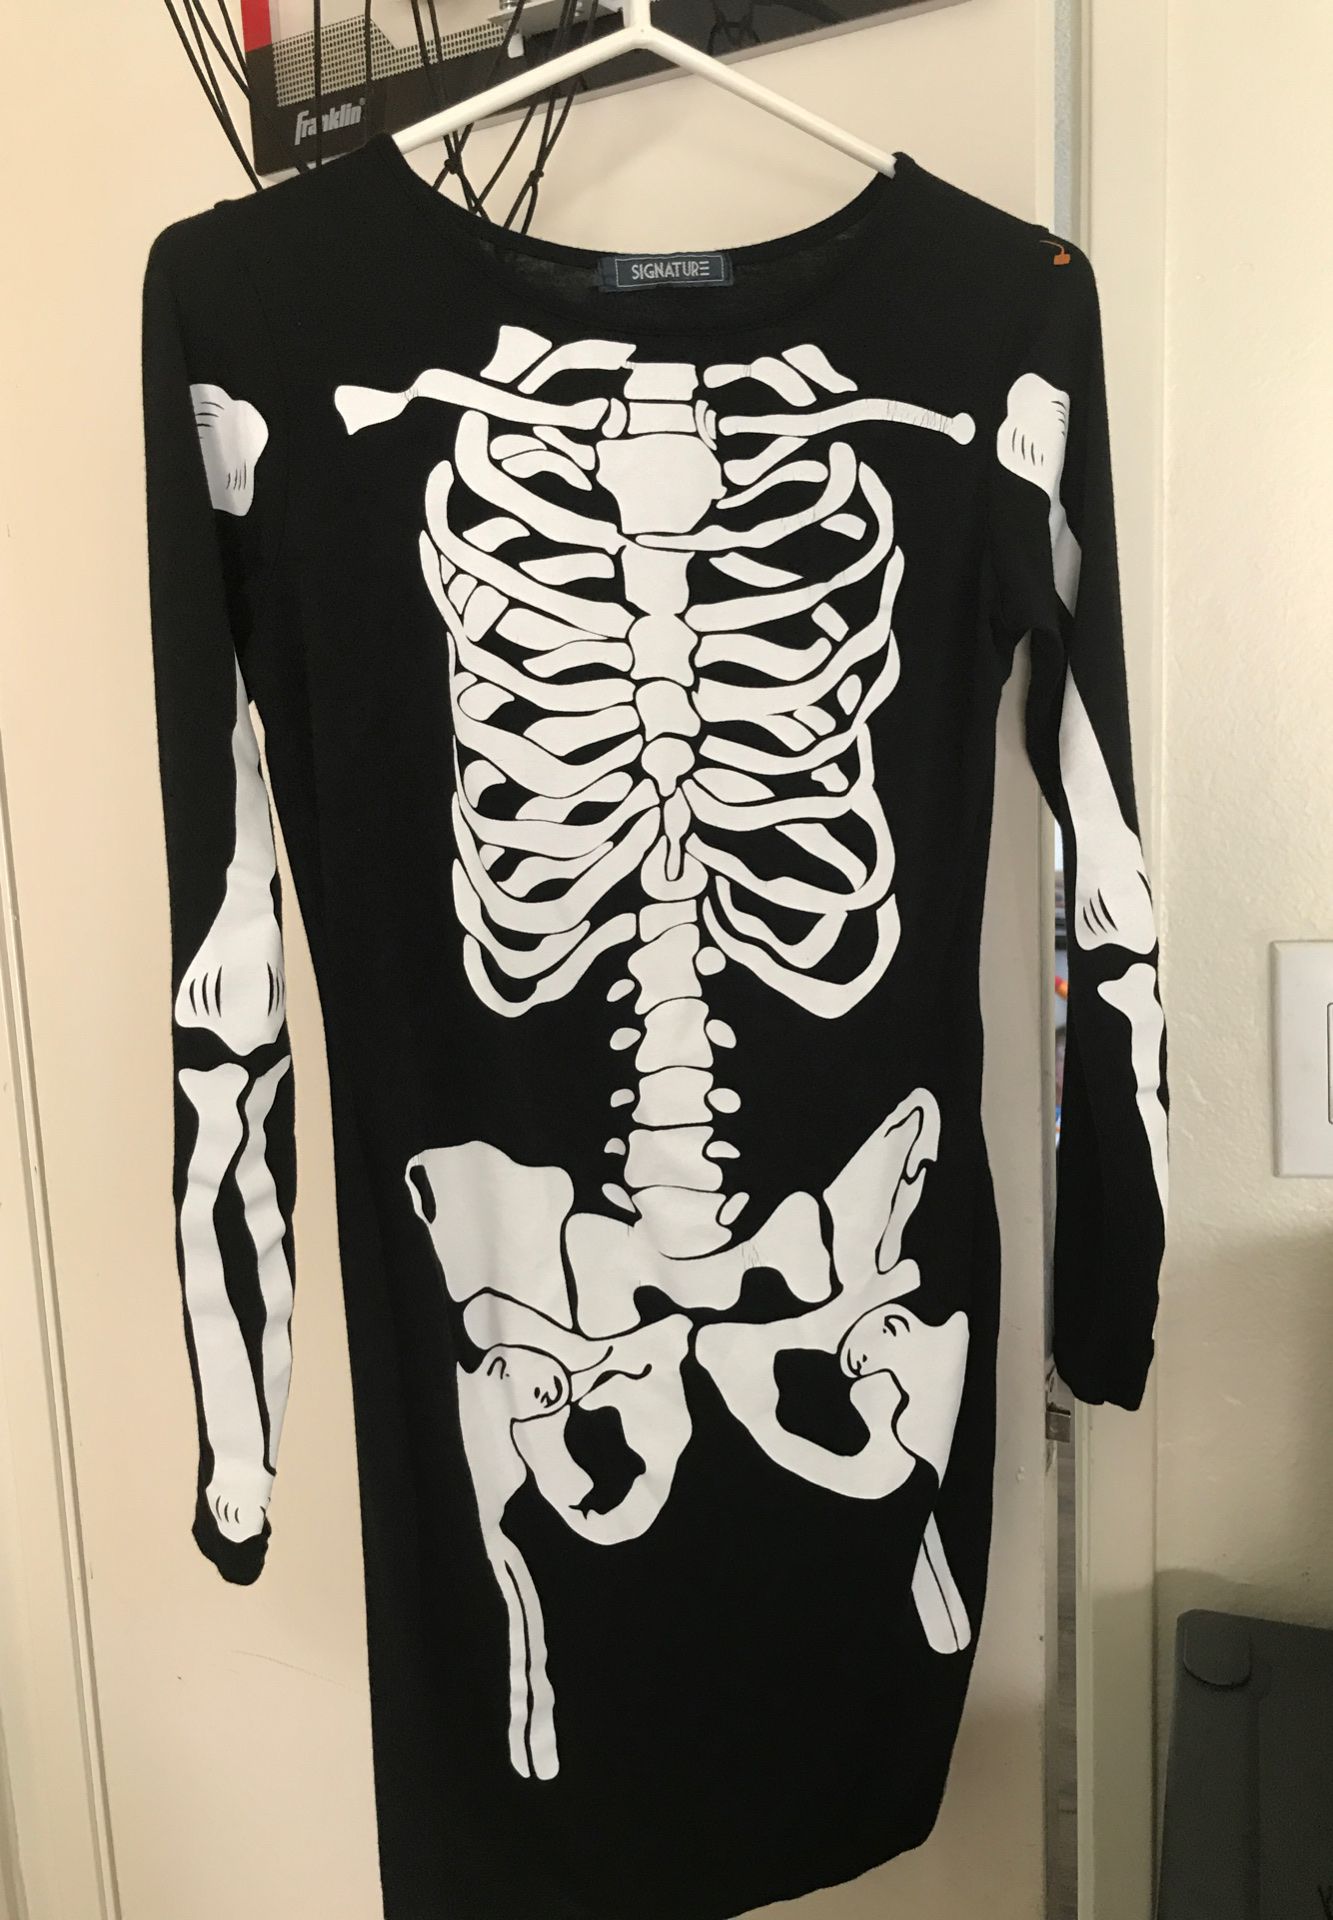 Skeleton dress